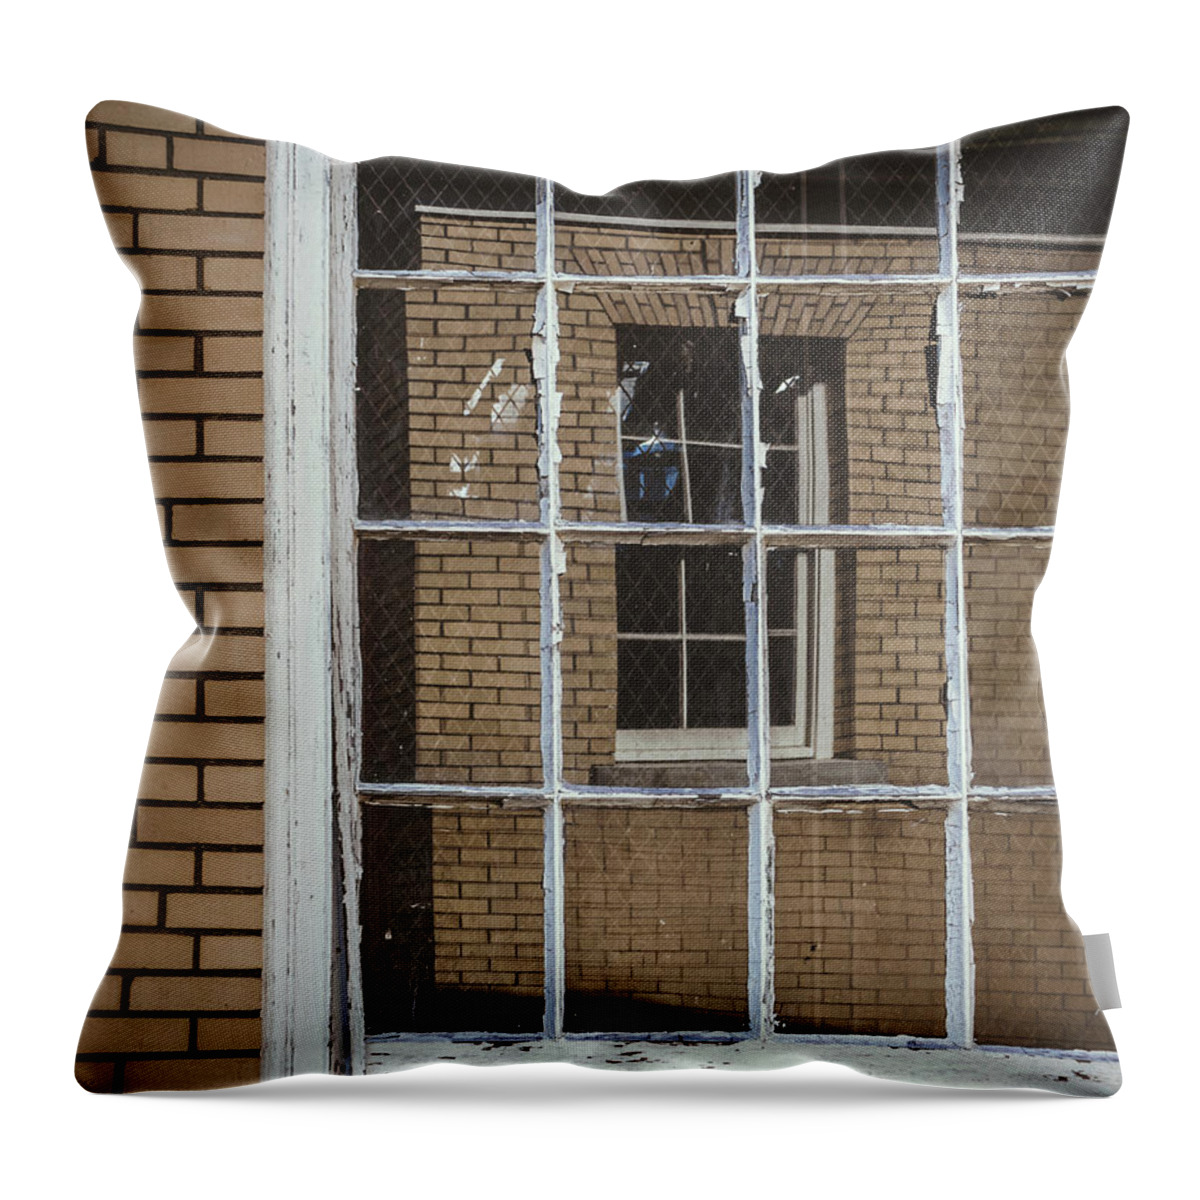 Sandy Hook Throw Pillow featuring the photograph window in window - Sandy Hook, NJ by Steve Stanger